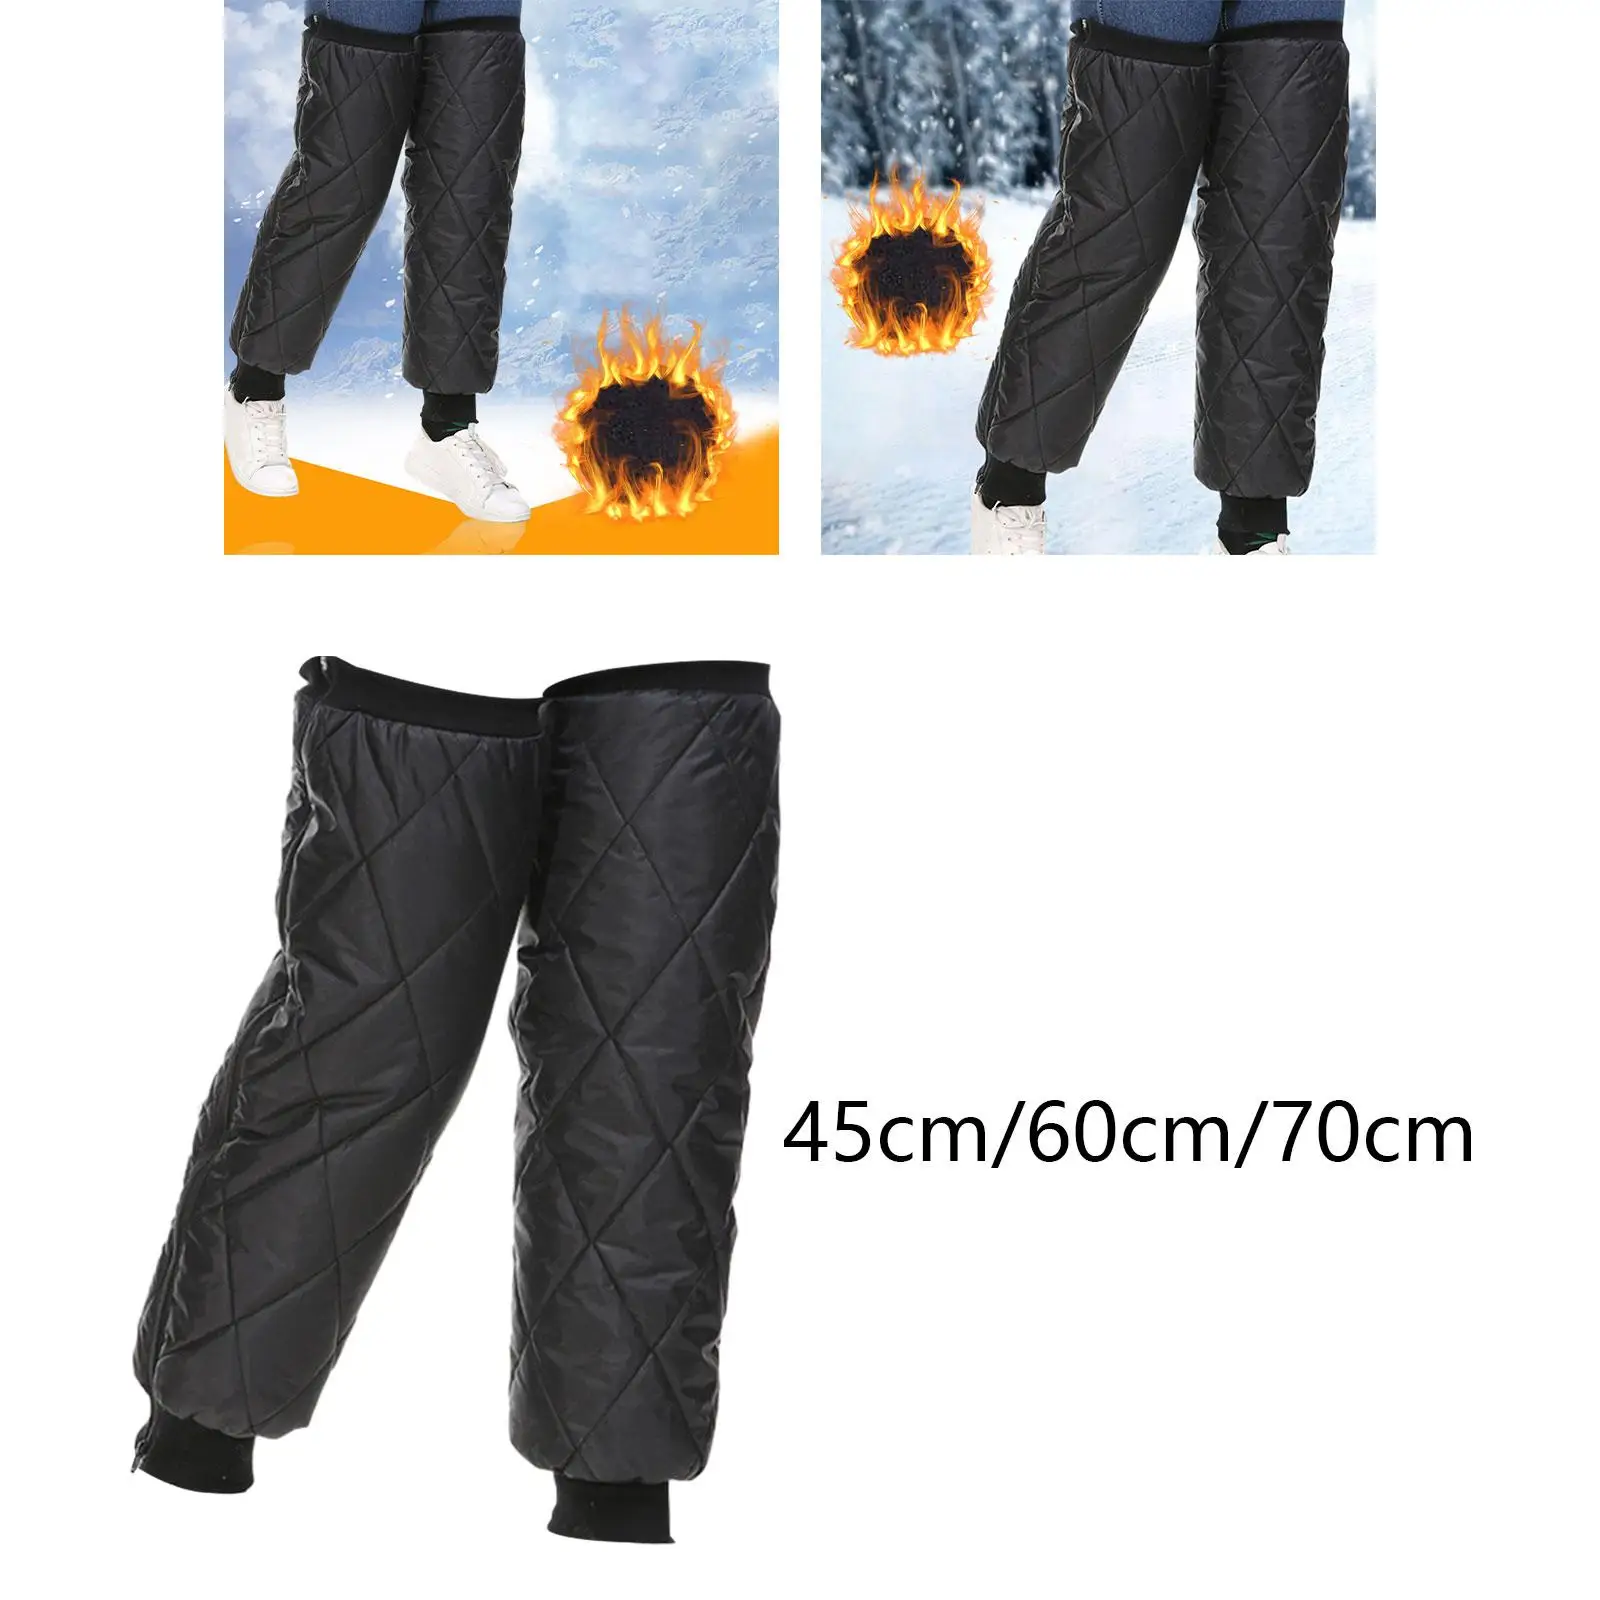 1 Pair Leg Warmers Legwarmer Thermal Protective Gear Zipper Leg Gaiter Leg Sleeves for Outdoor Winter Working Men Women Fishing